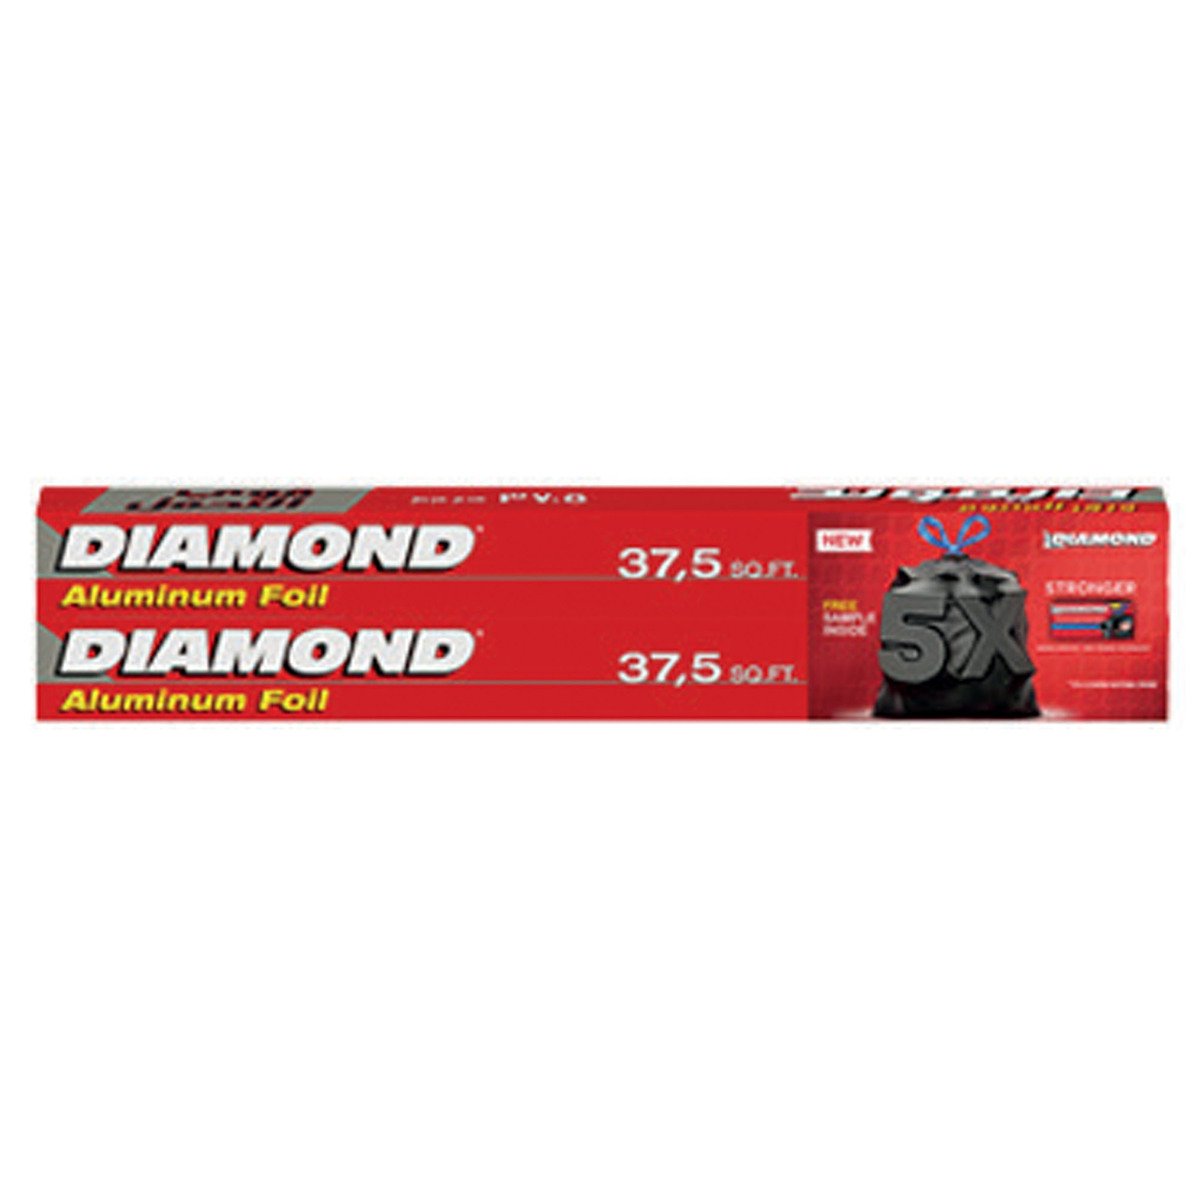 Diamond Aluminum Foil 37.5sq.ft 2 pcs + Offer